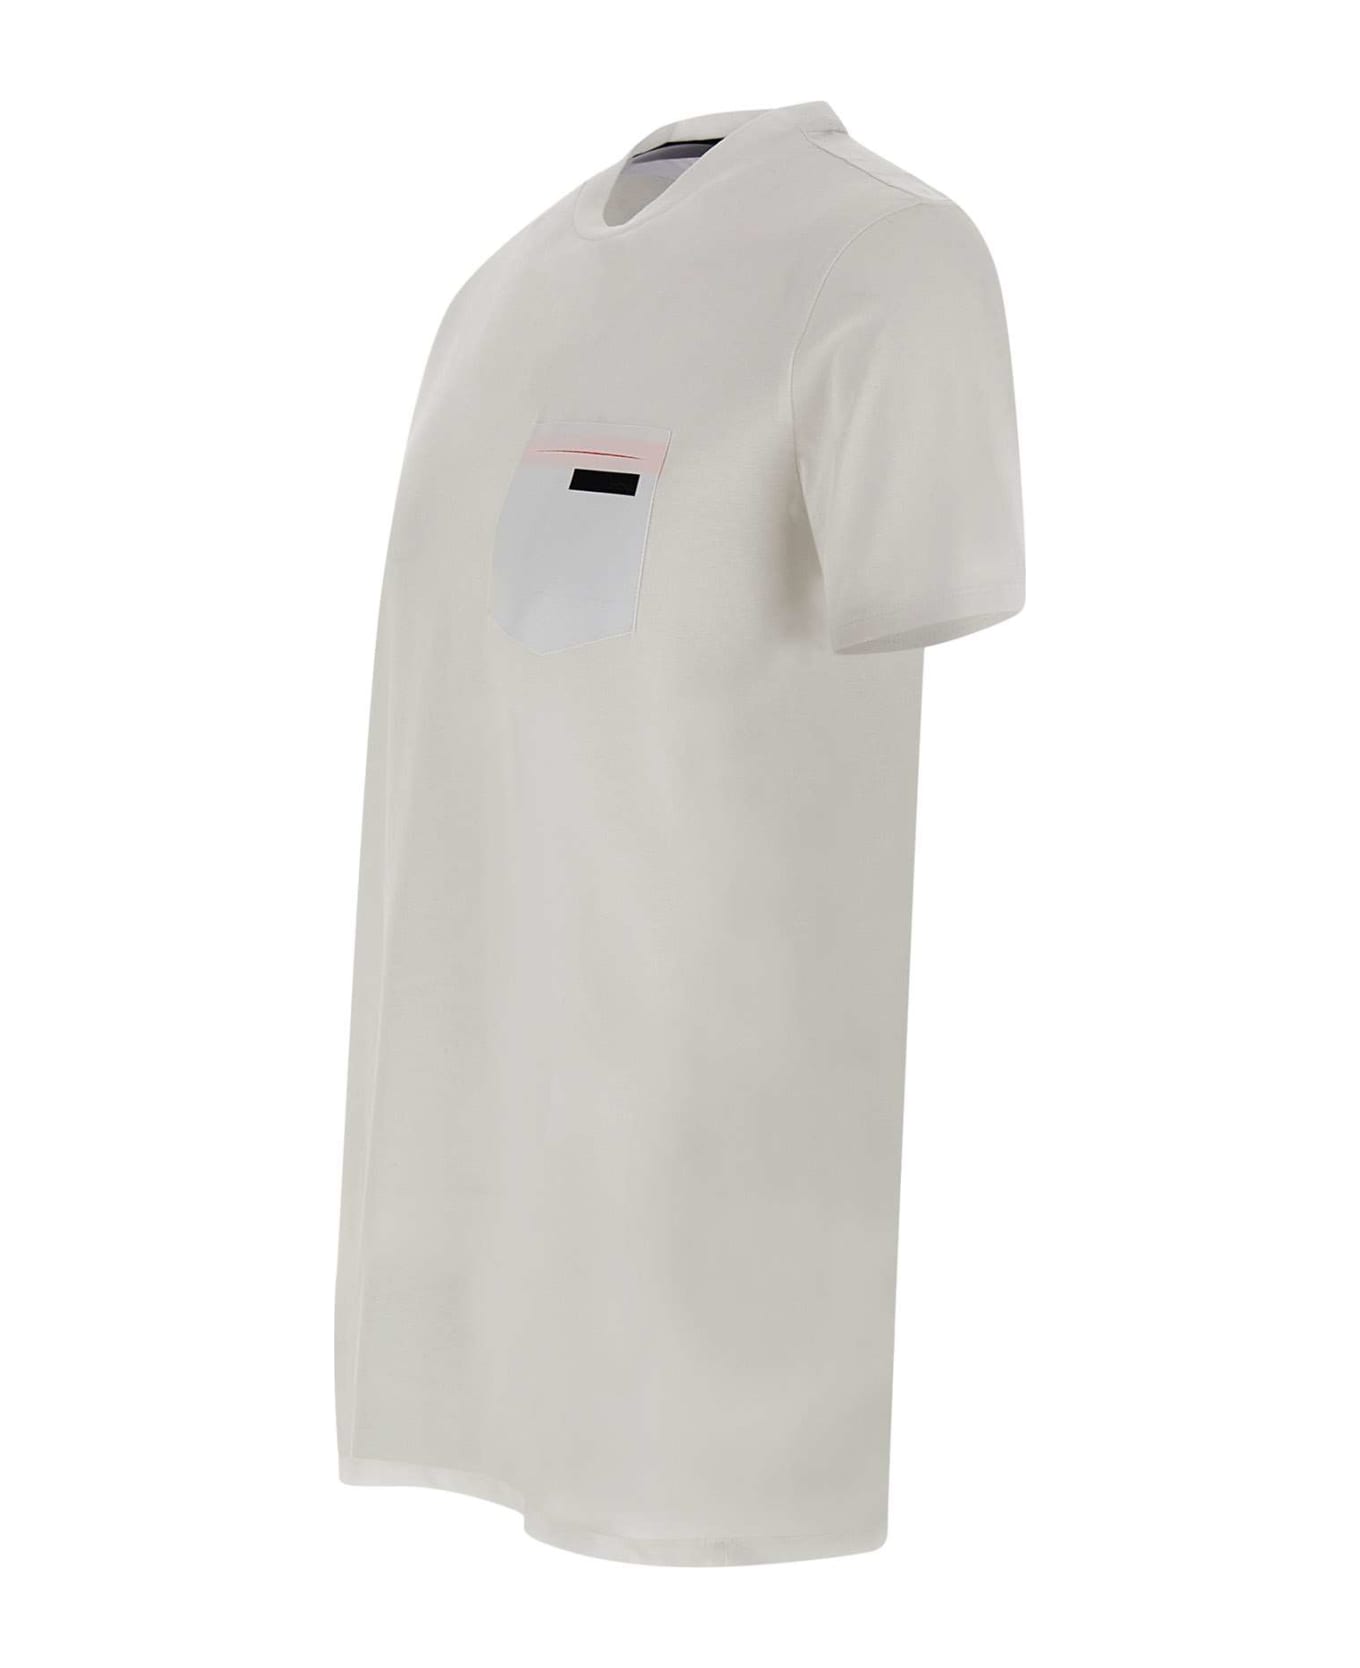 RRD - Roberto Ricci Design 'revo Shirty' T-shirt RRD - Roberto Ricci Design - WHITE